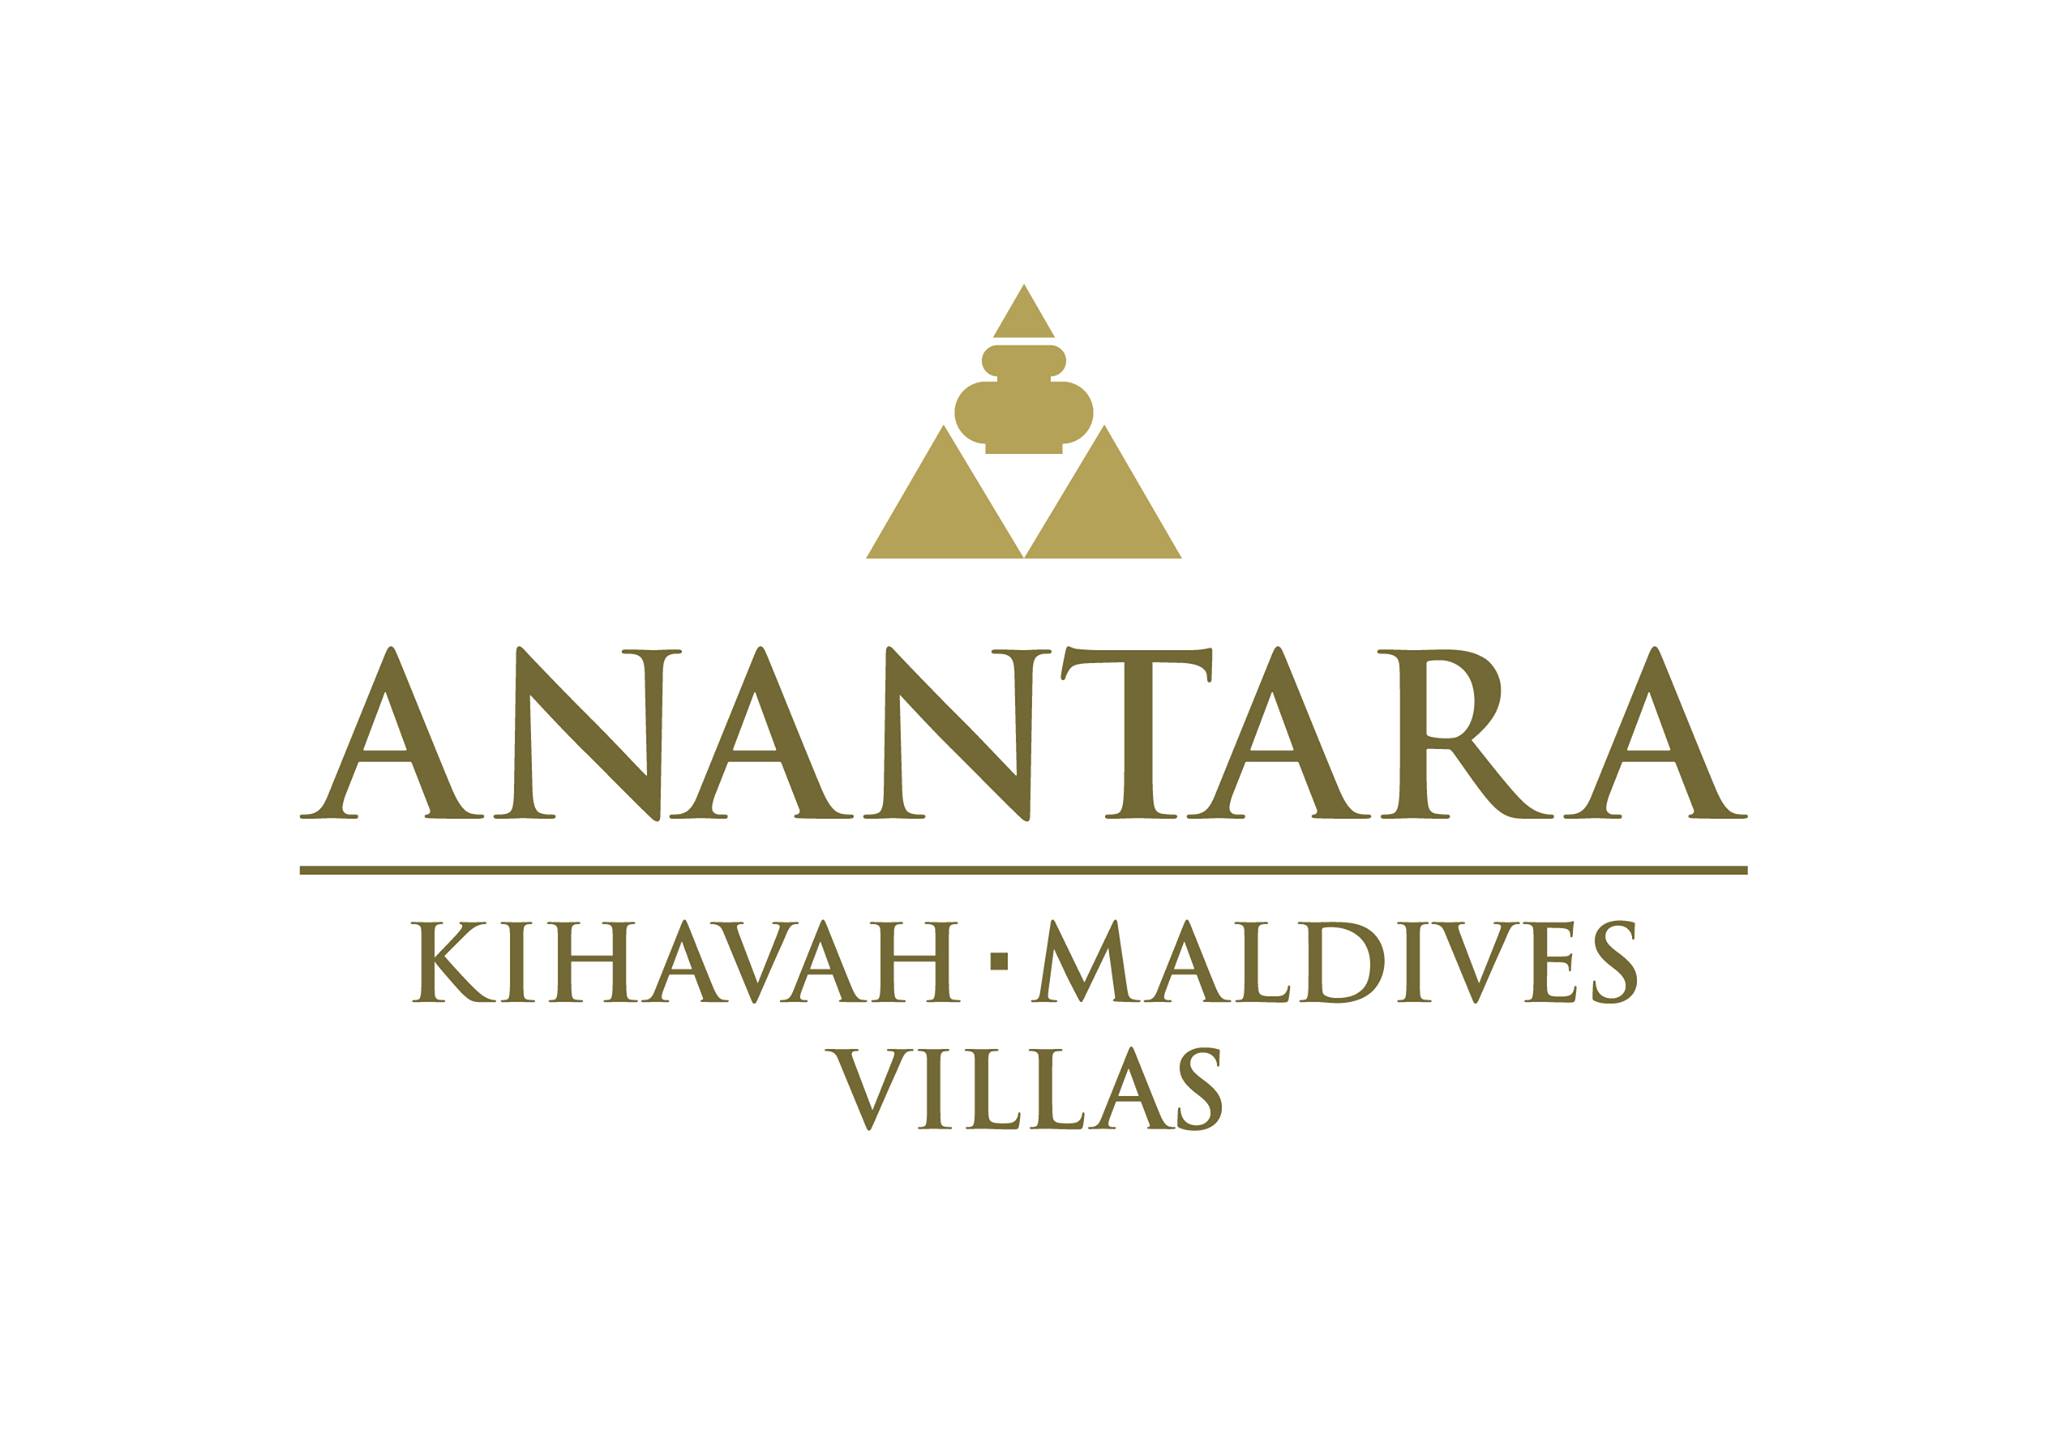 anantara-kihavah-maldives-villas-logo